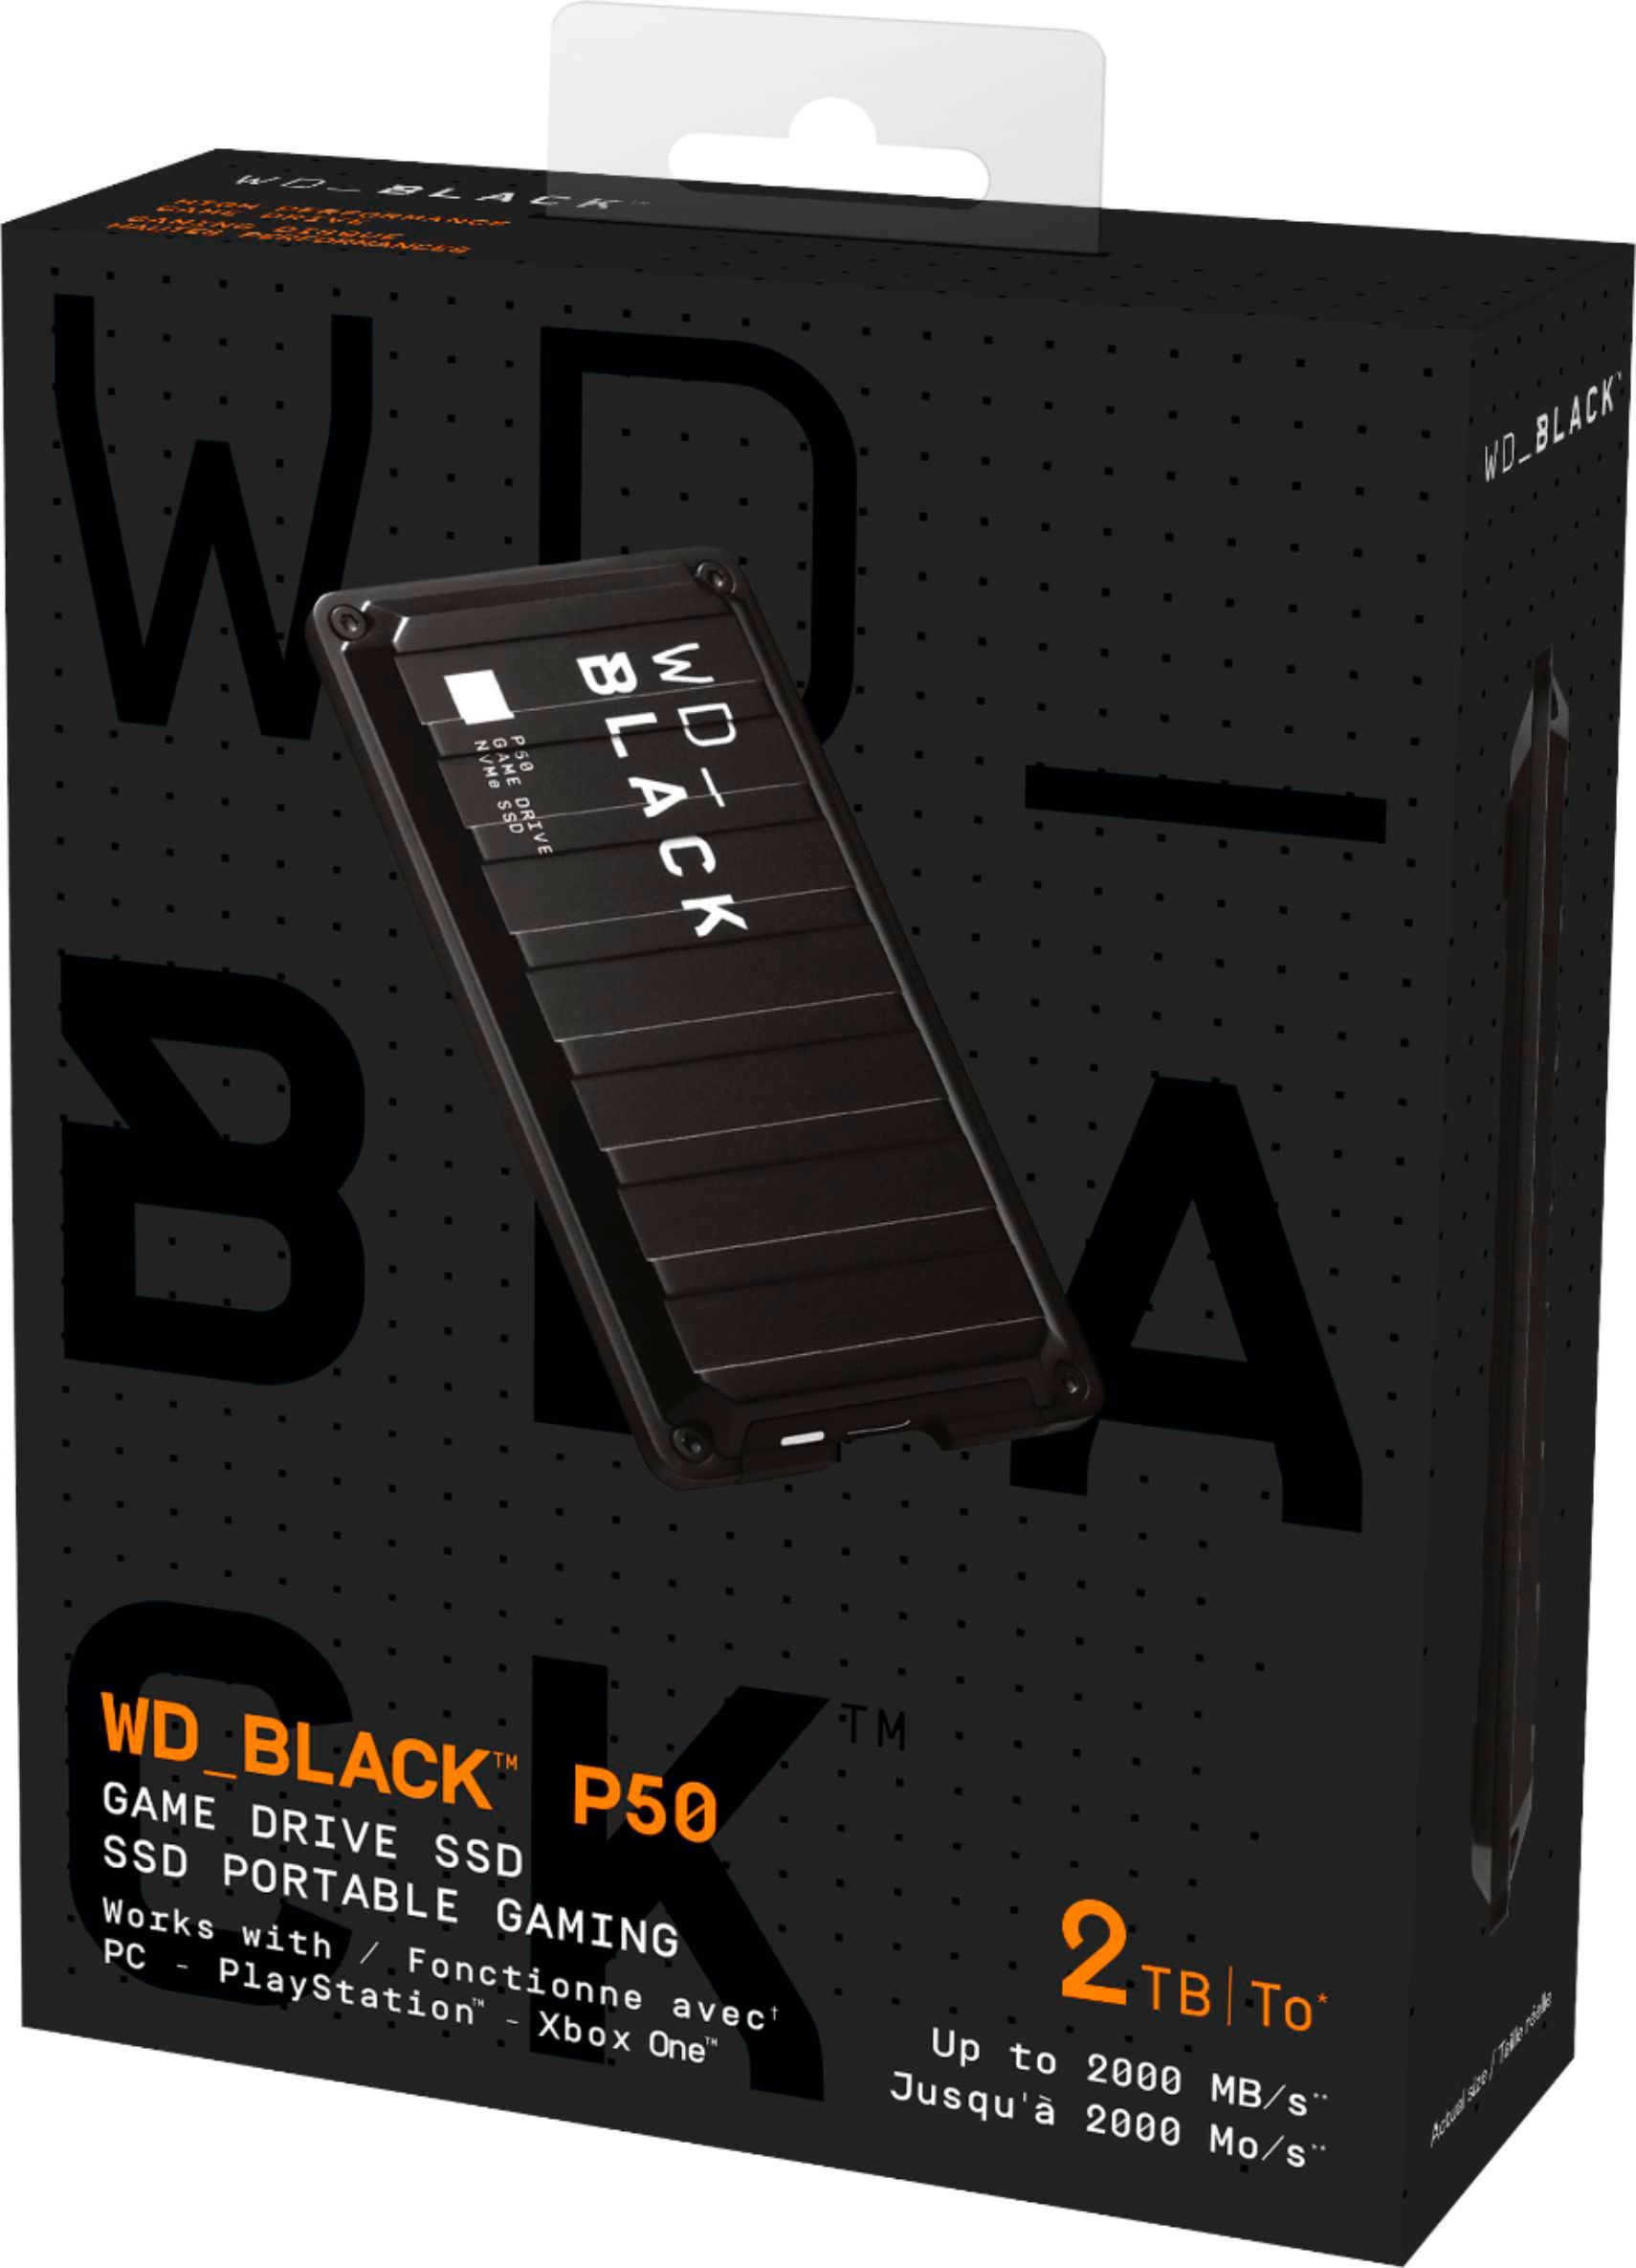 RIPIAN External Hard Disk Black P50 4TB 2TB 1TB 500GB Game Drive